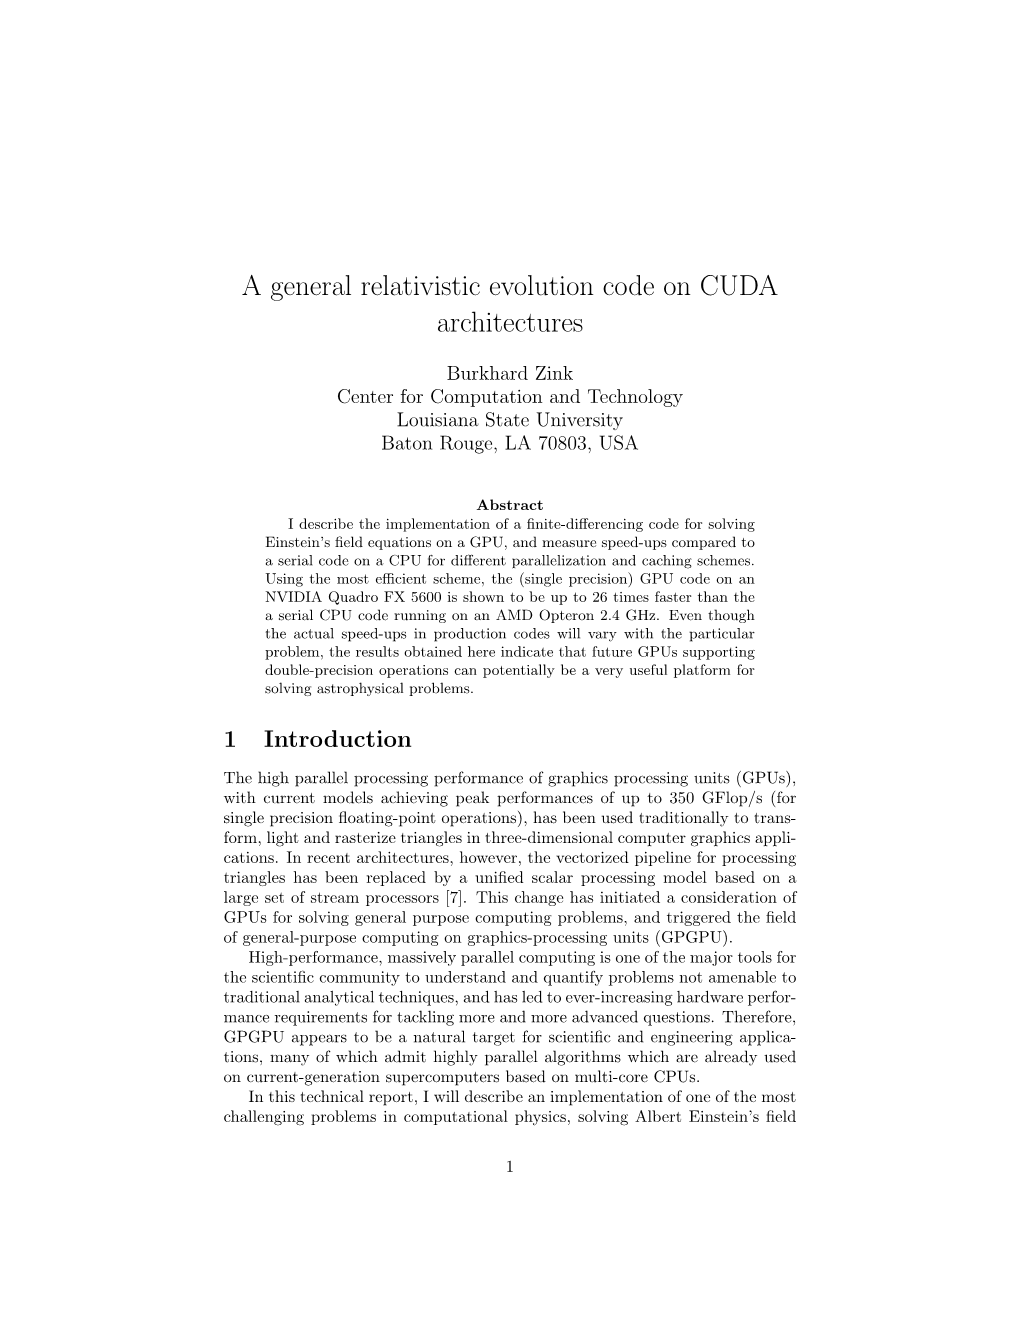 A General Relativistic Evolution Code on CUDA Architectures